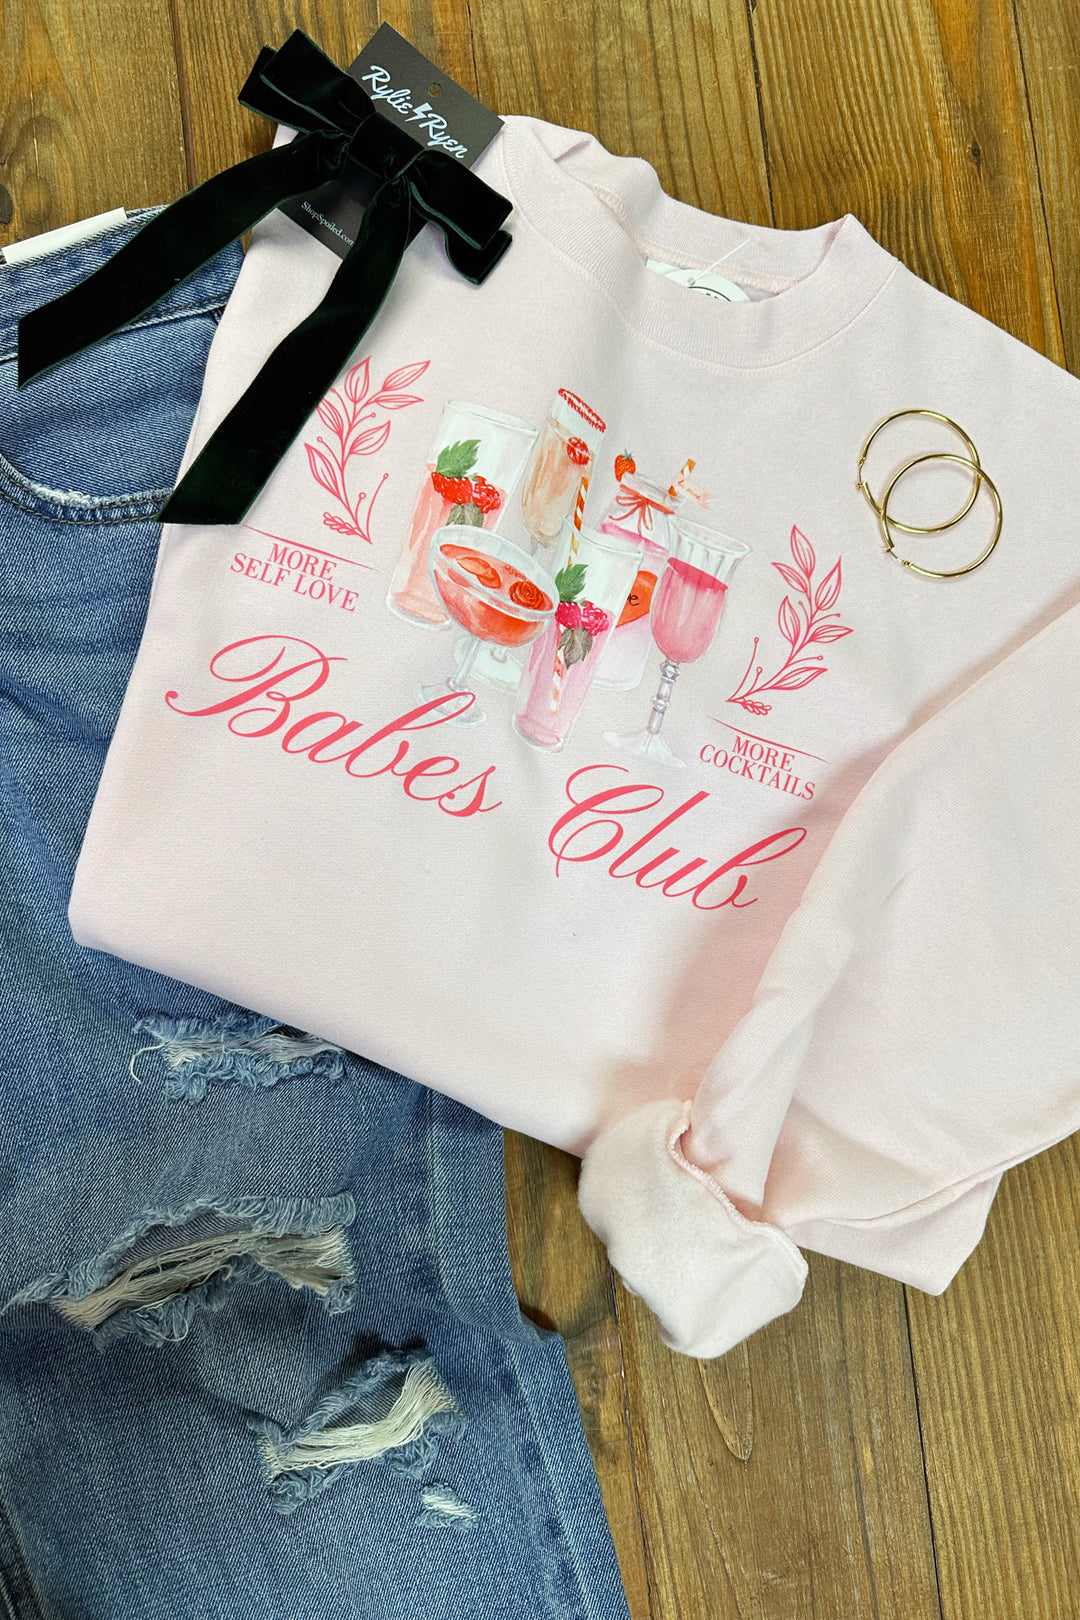 Babes Club Sweatshirt - ShopSpoiled